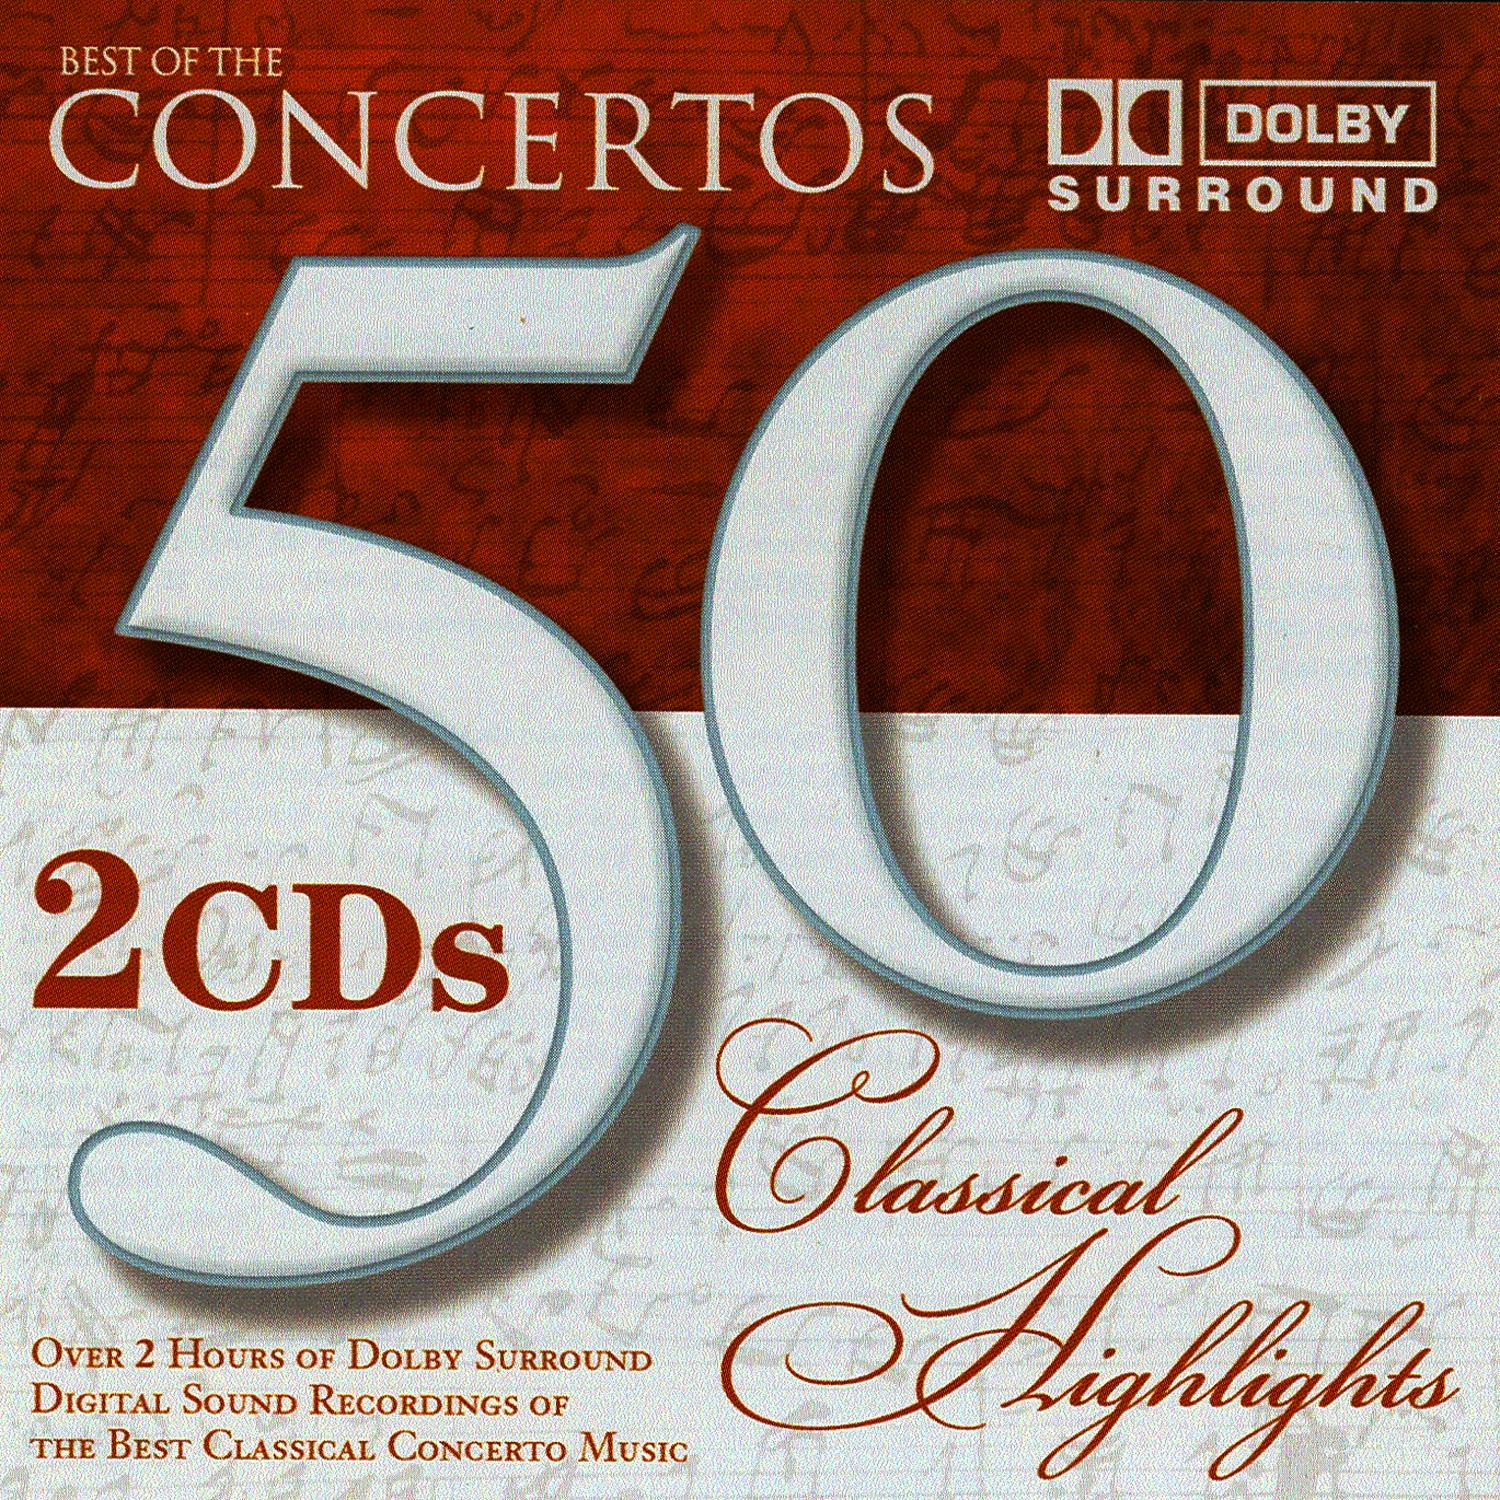 Brandenburg Concerto No. 1 in F Major, BWV 1046 - Adagio